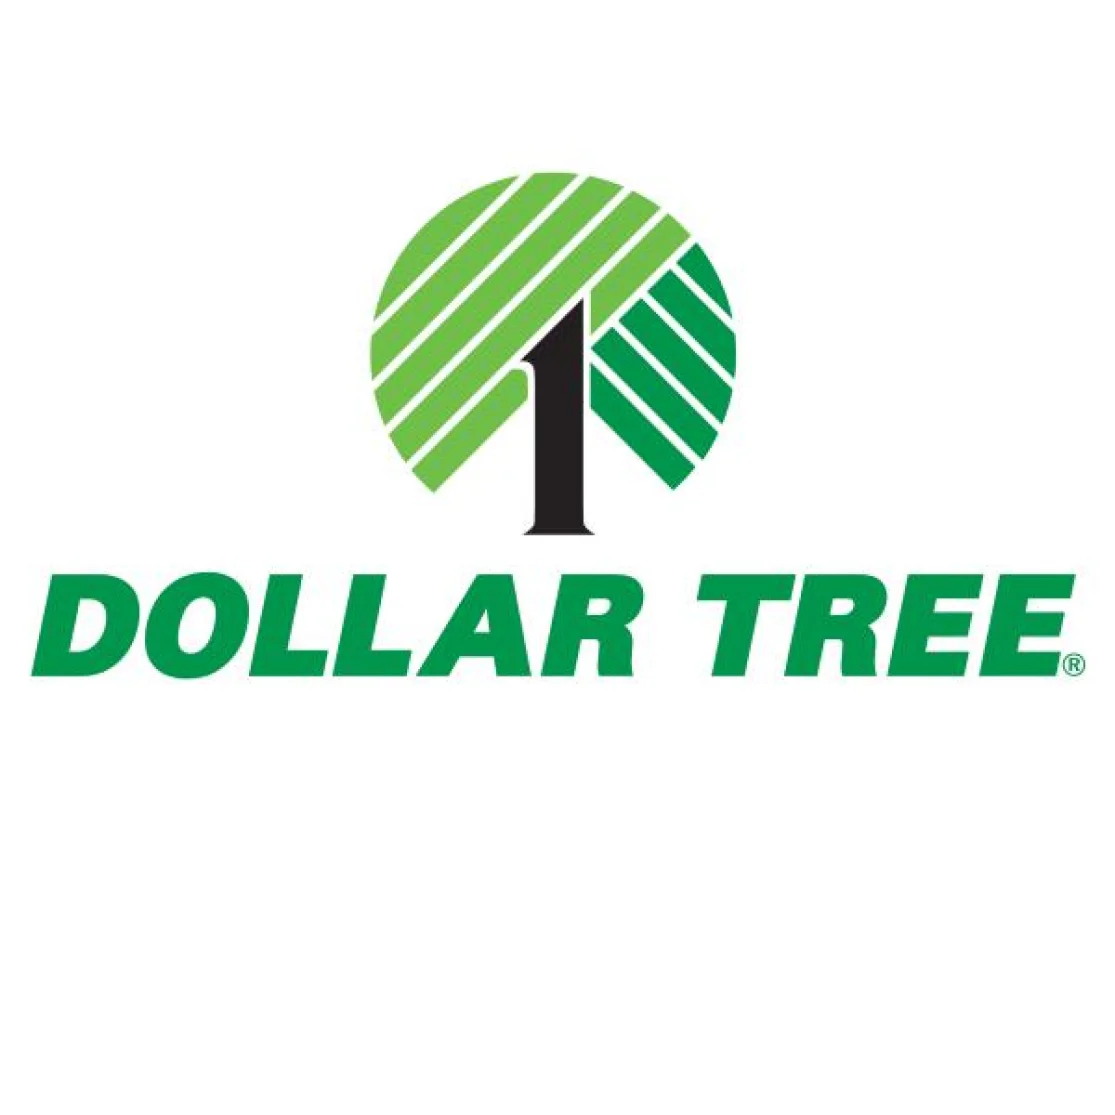 Best Dollar Tree Promo Code: 50% Off 50